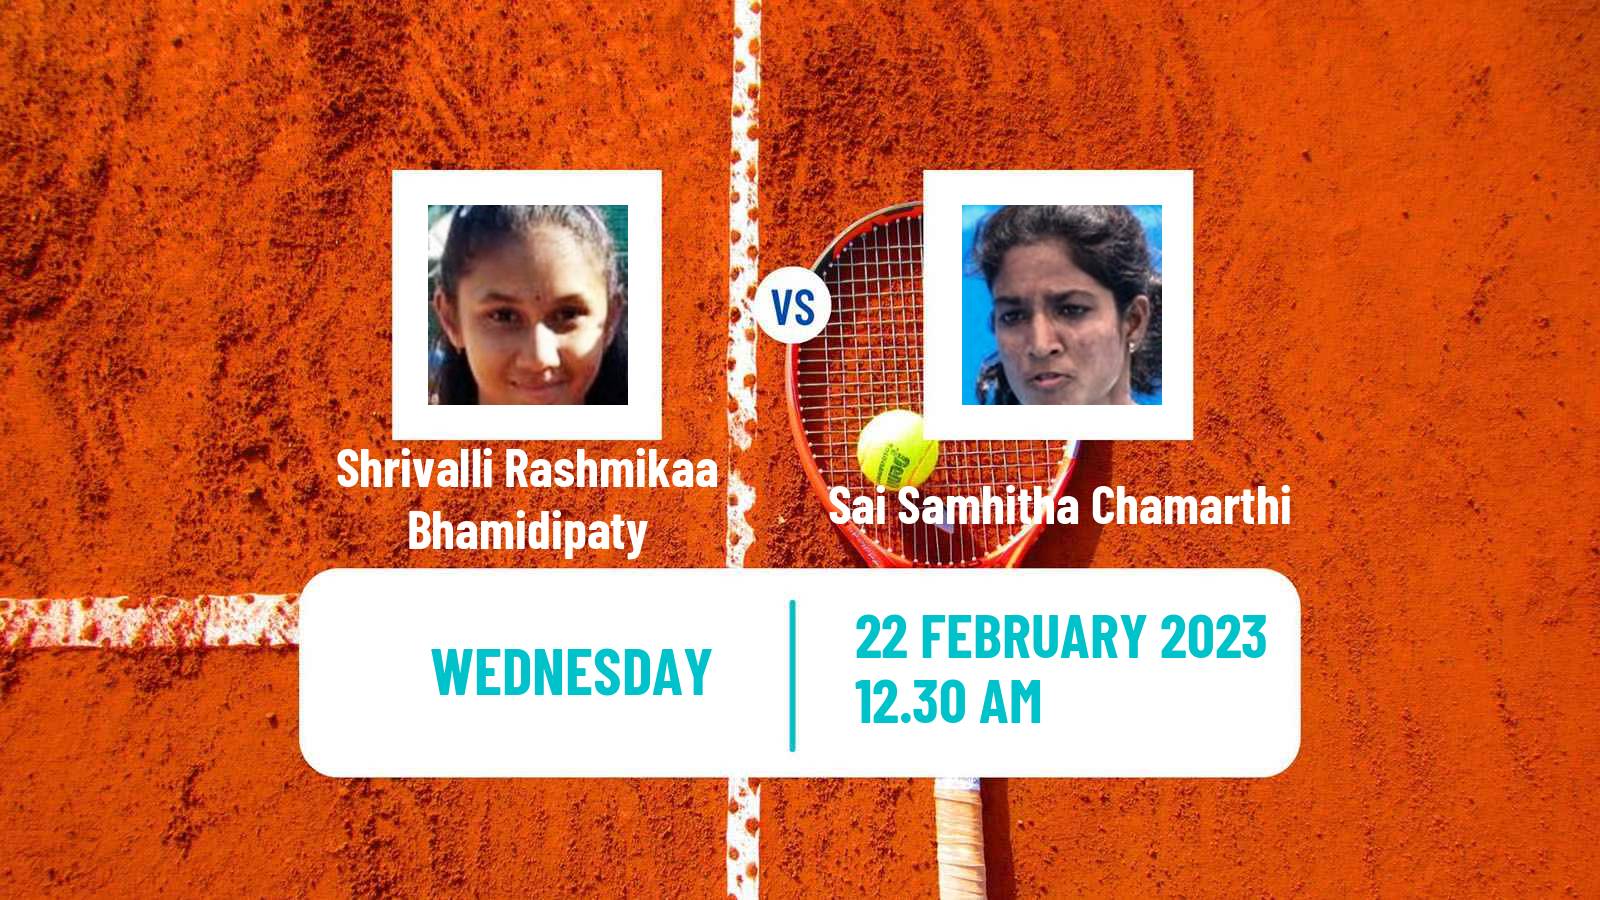 Tennis ITF Tournaments Shrivalli Rashmikaa Bhamidipaty - Sai Samhitha Chamarthi